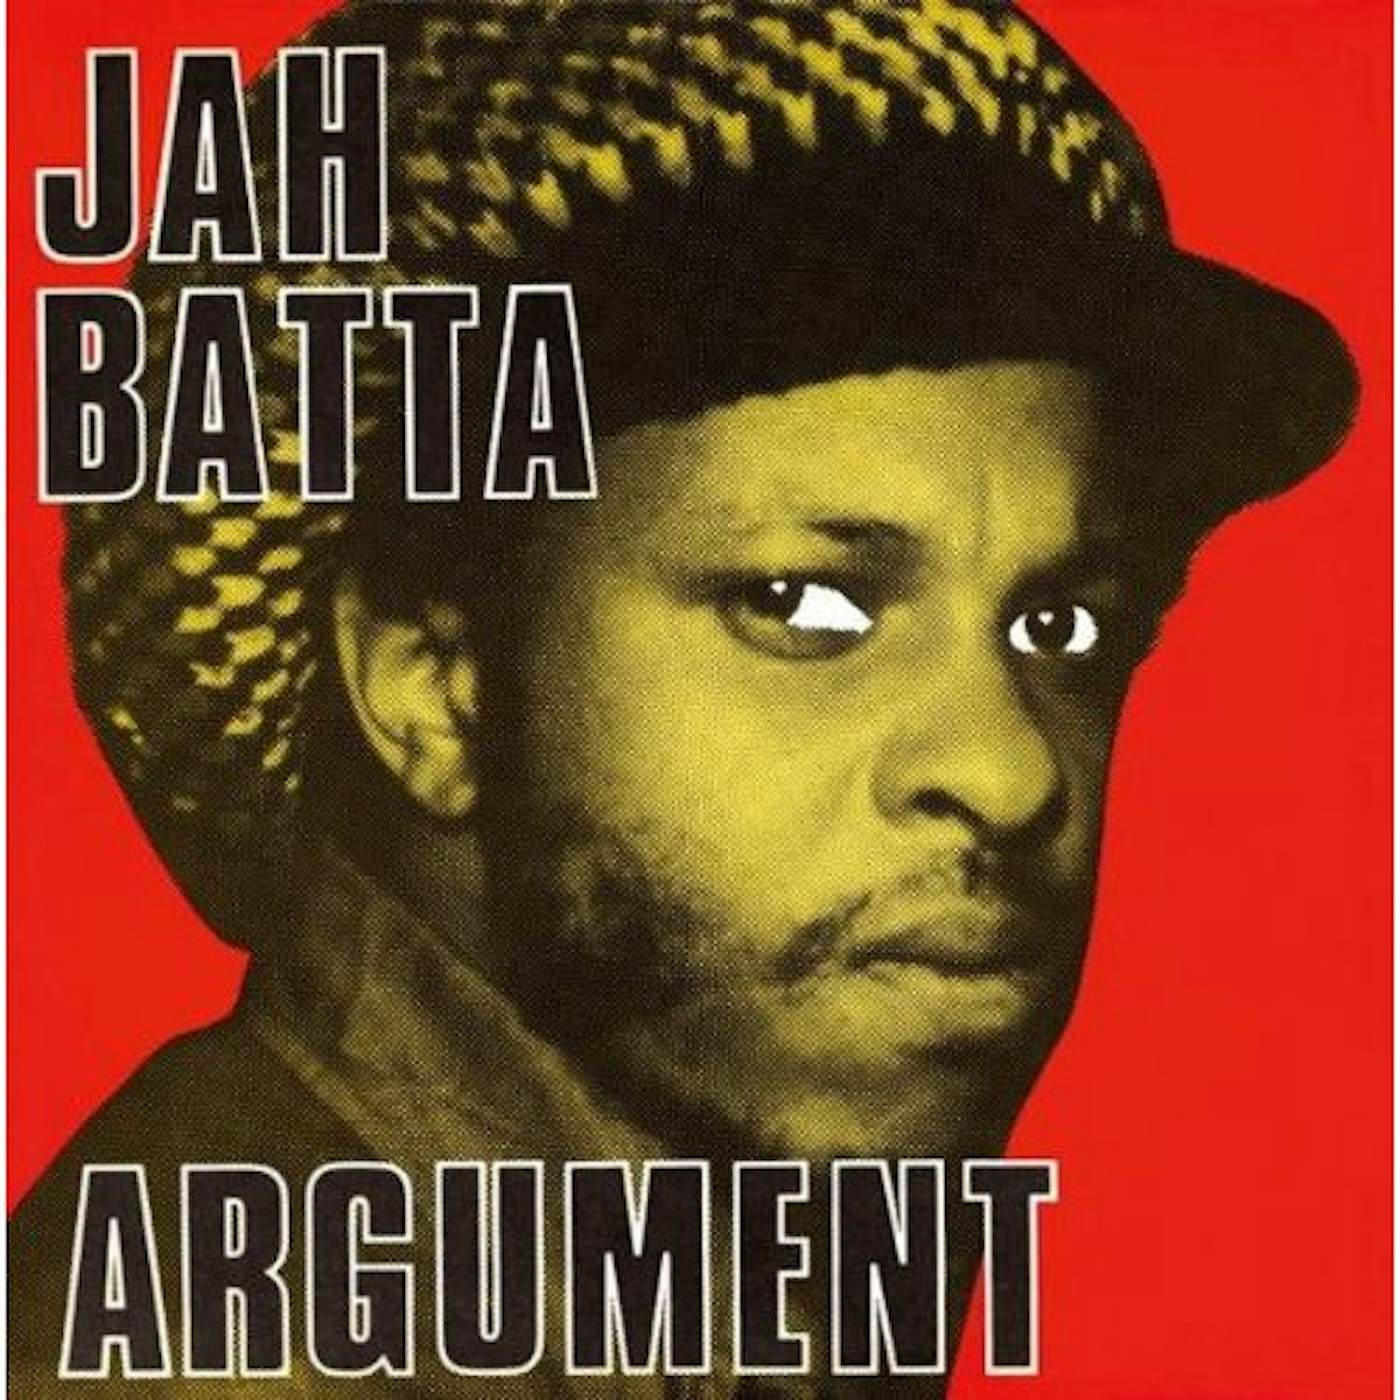 Jah Batta ARGUMENT CD